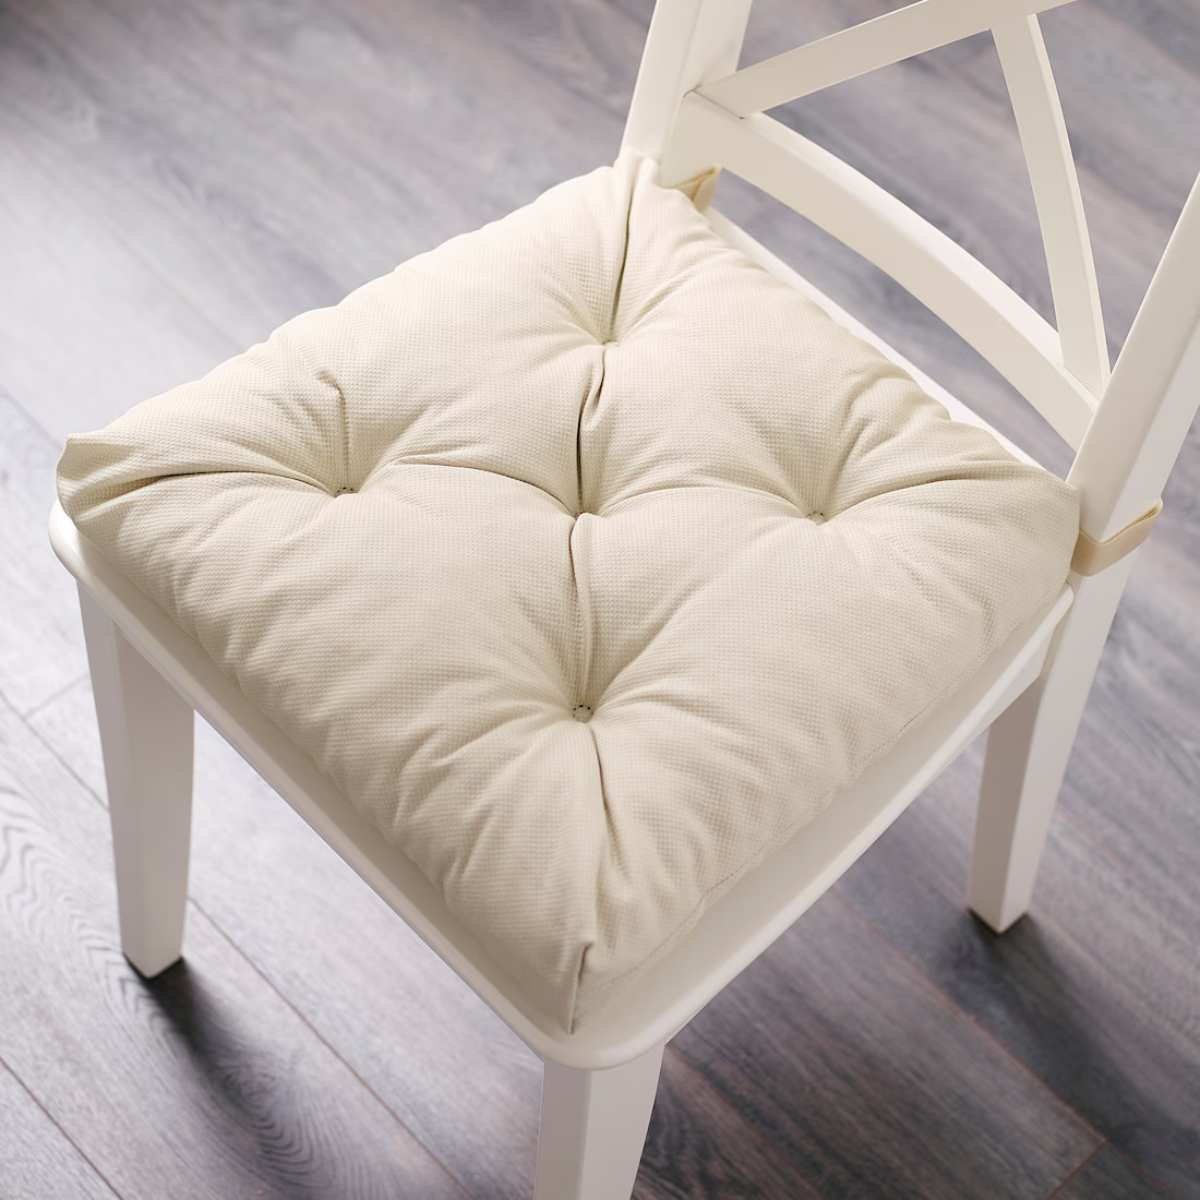 How To Wash IKEA Chair Cushions